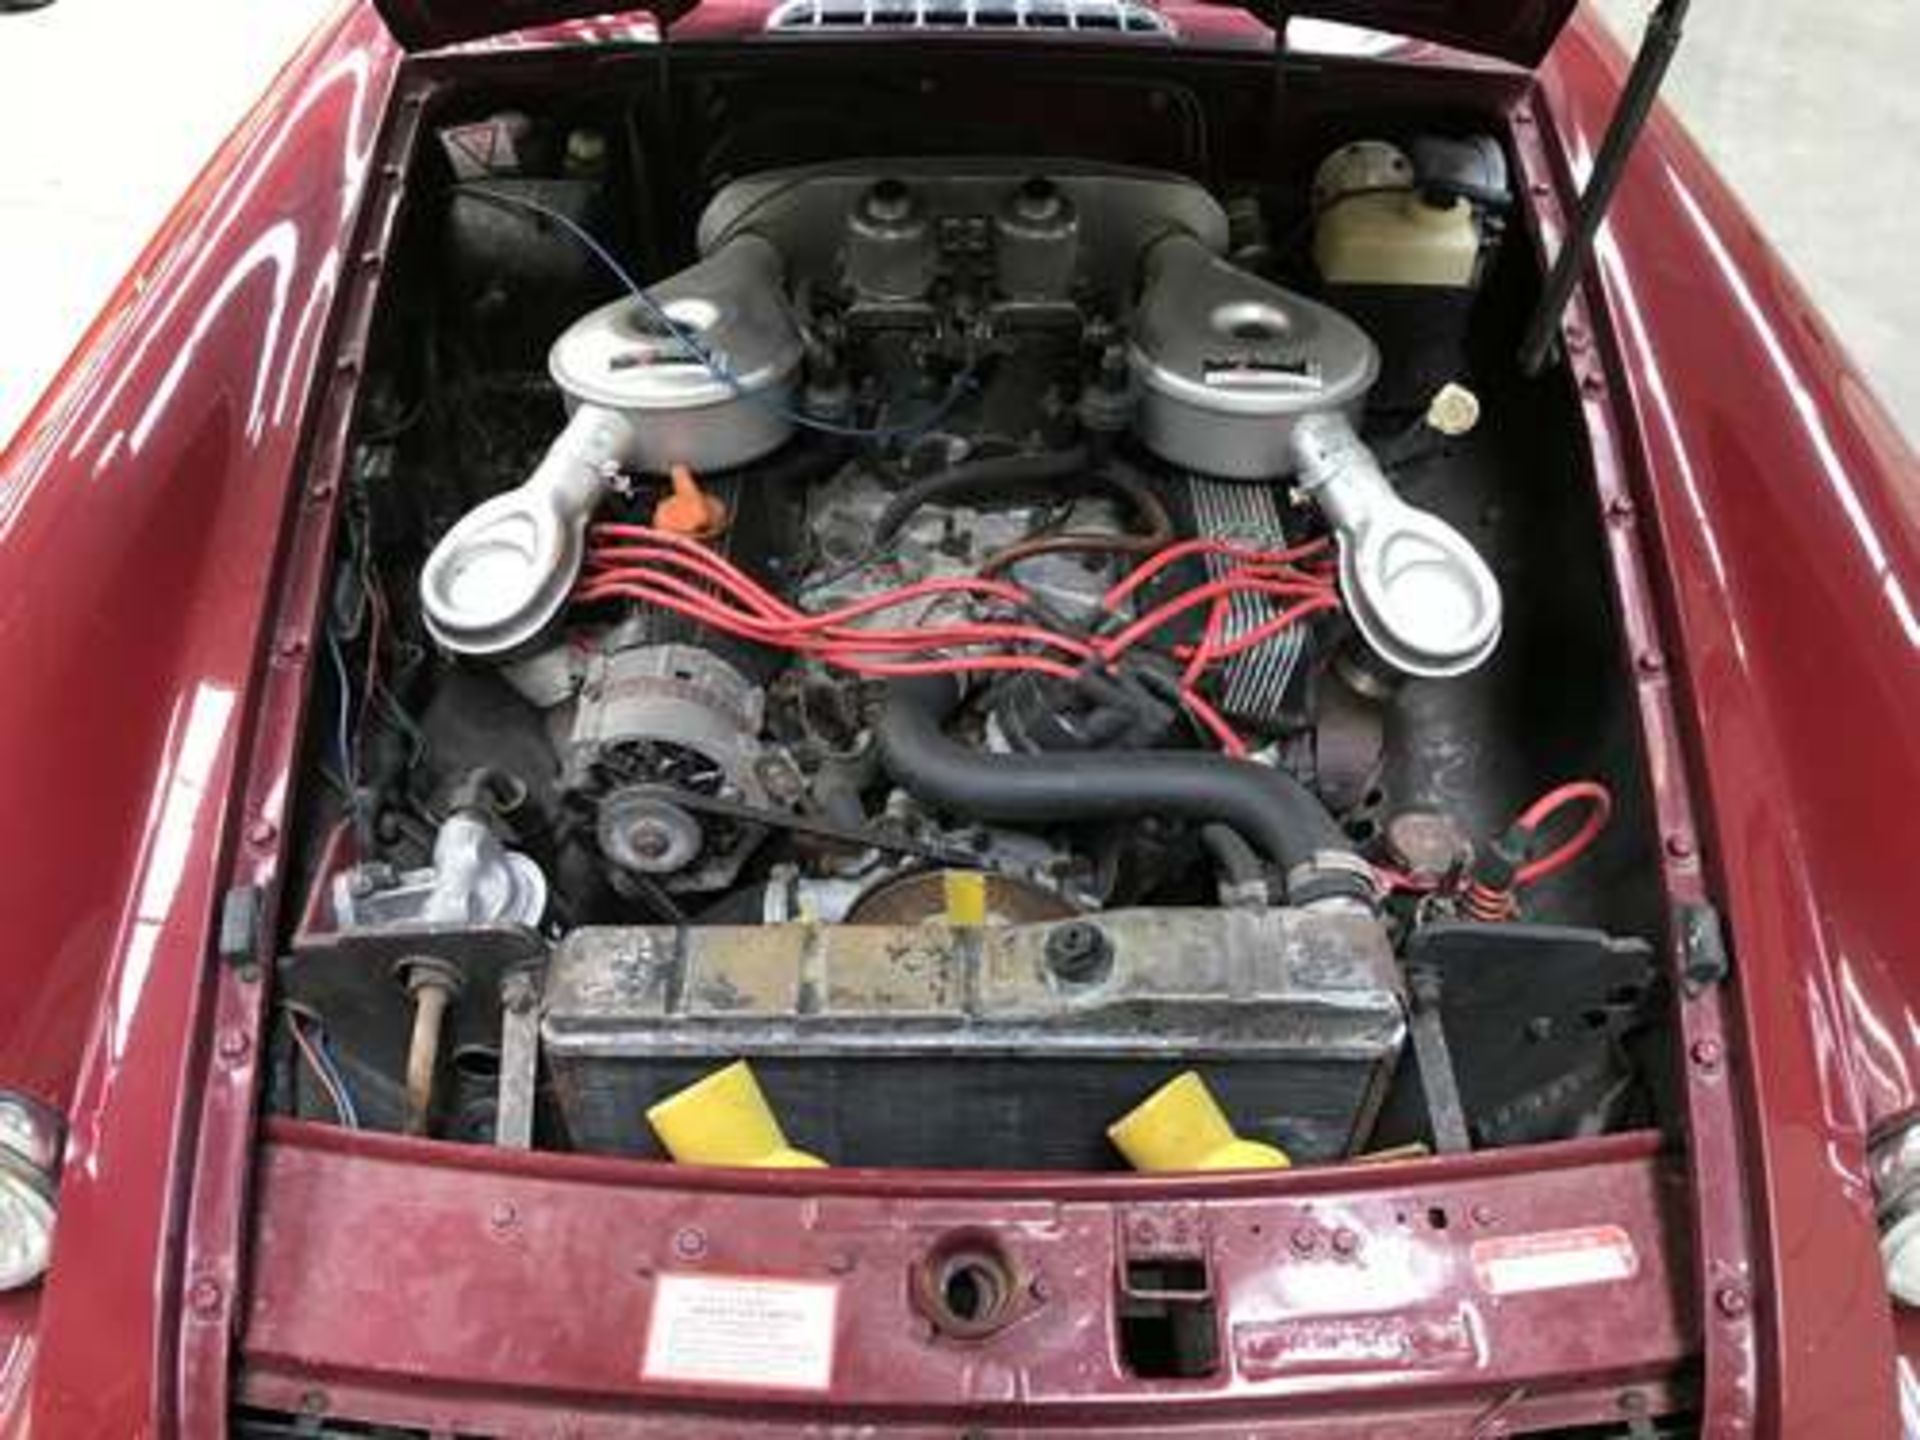 MG B GT V8 - 3528cc - Image 7 of 7